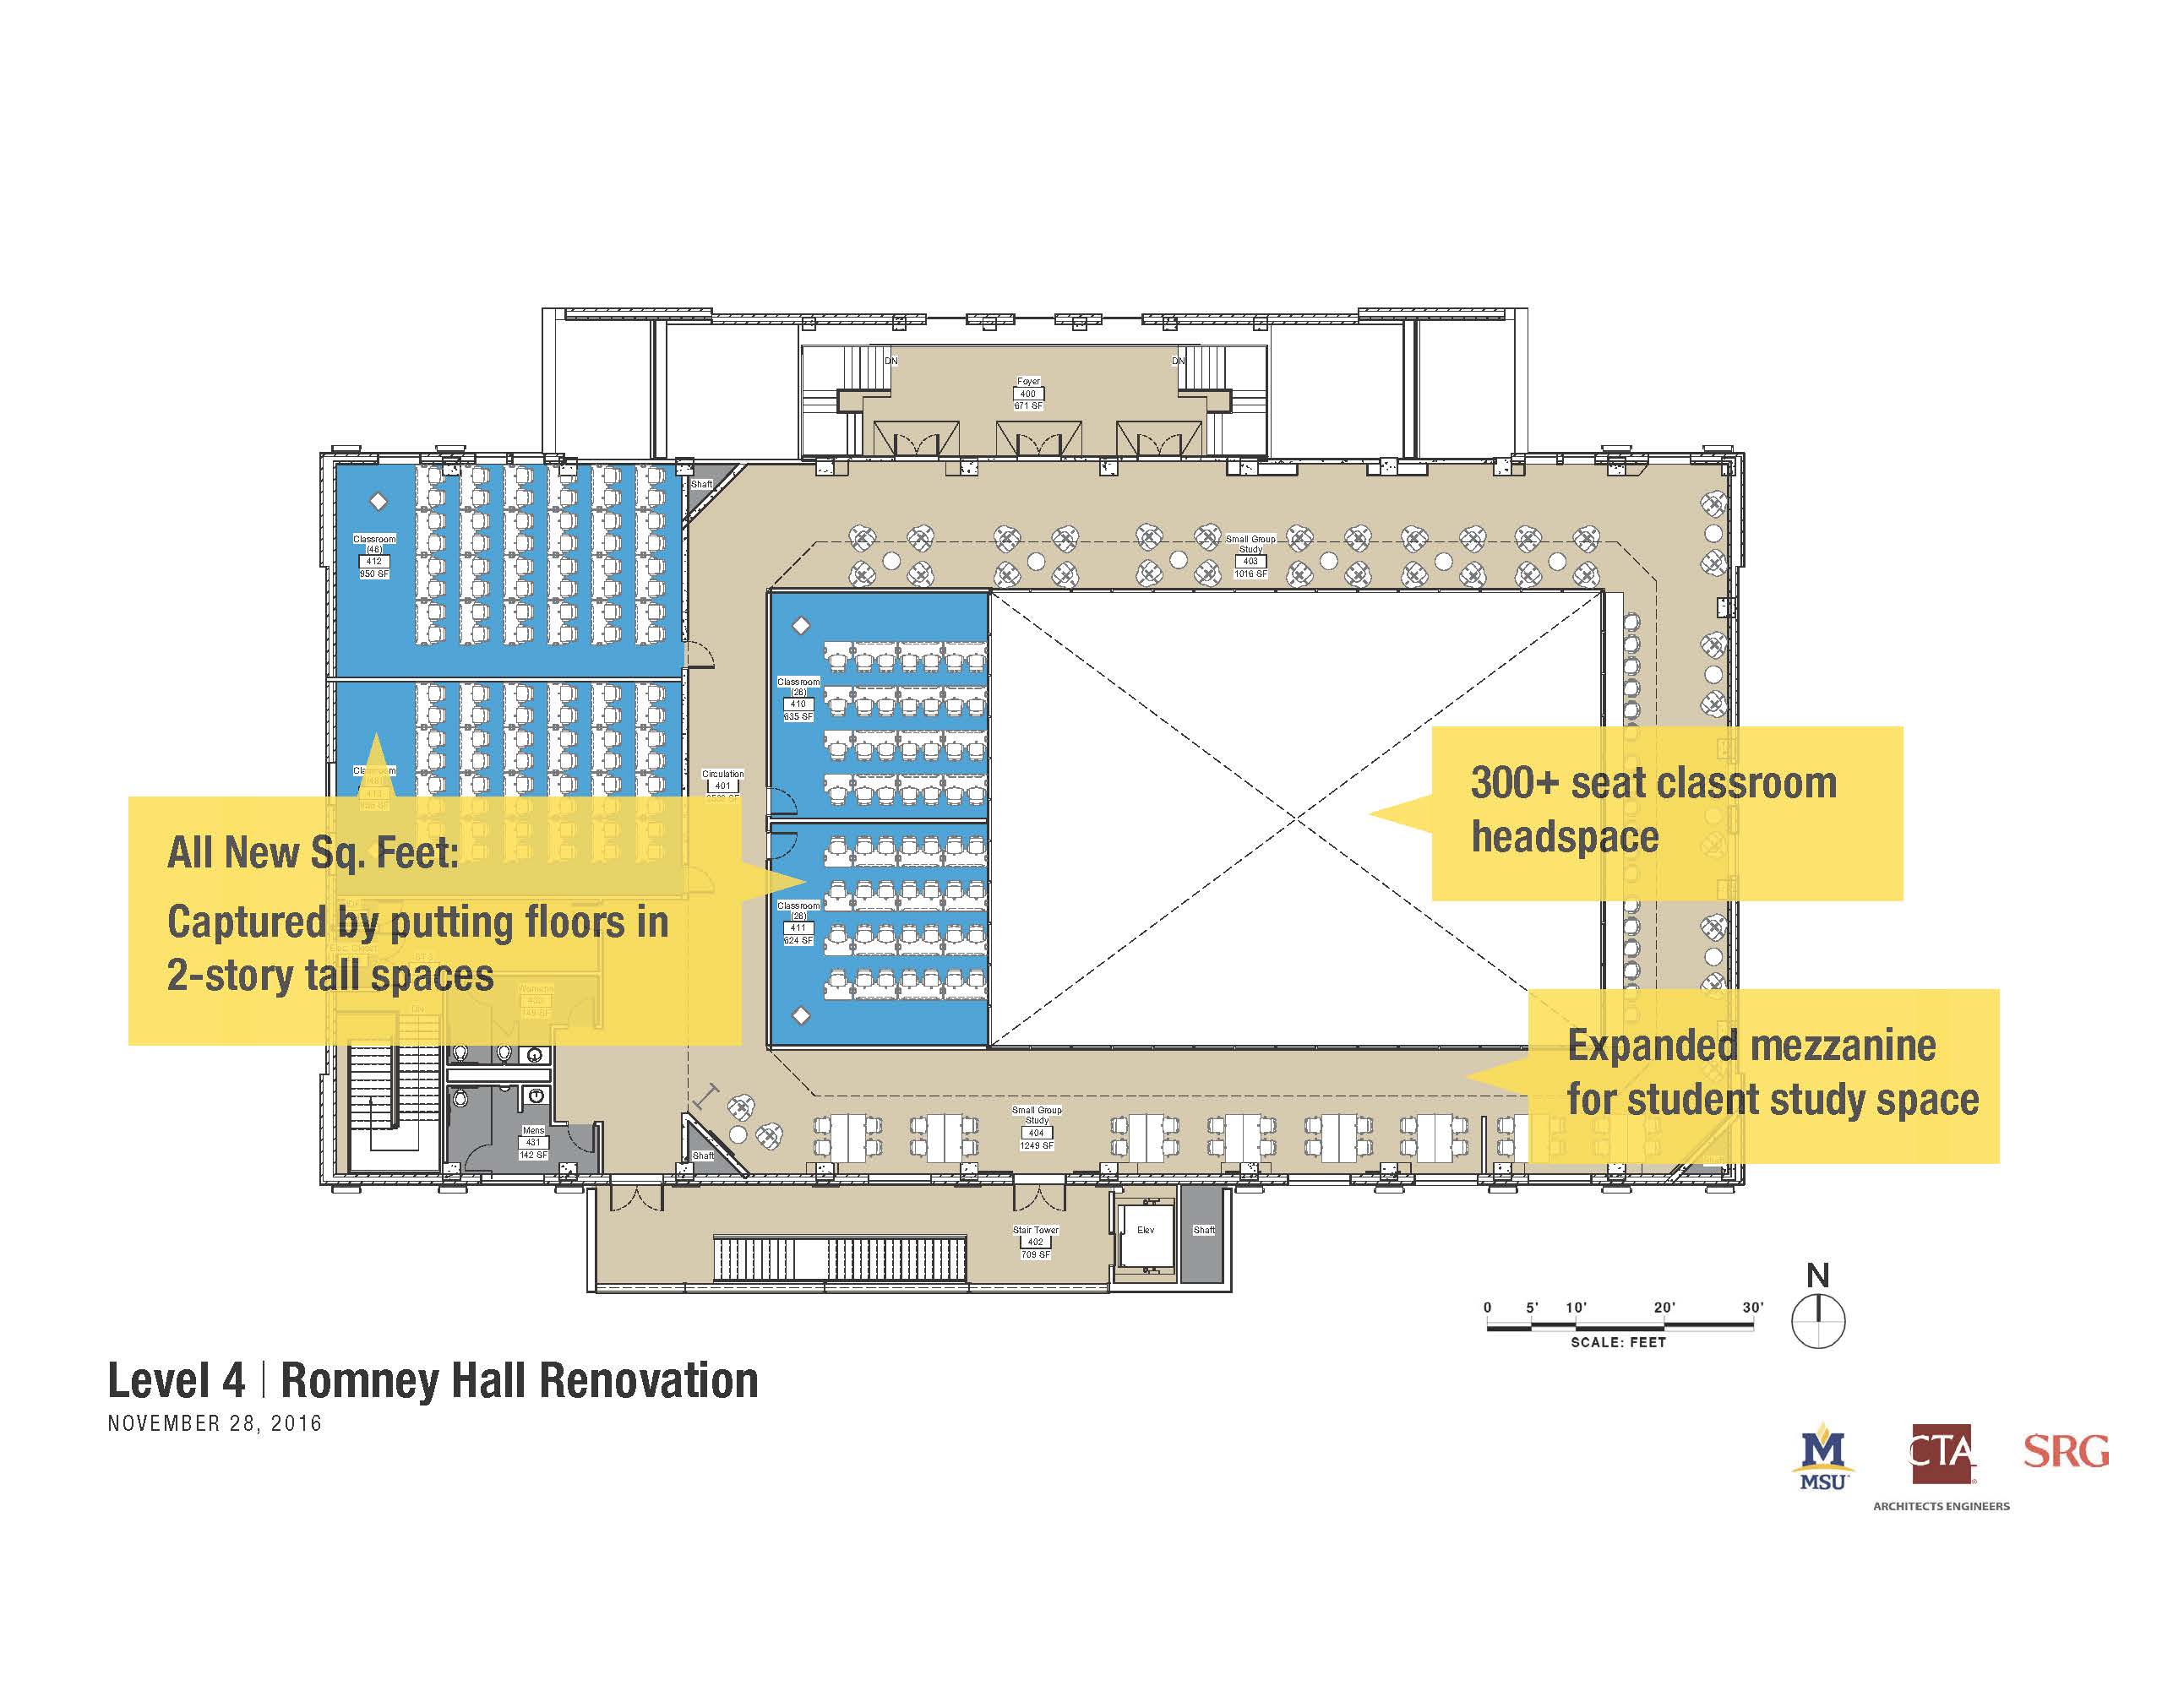 Romney Hall repurposing floorplan showing Level 4 of the building.